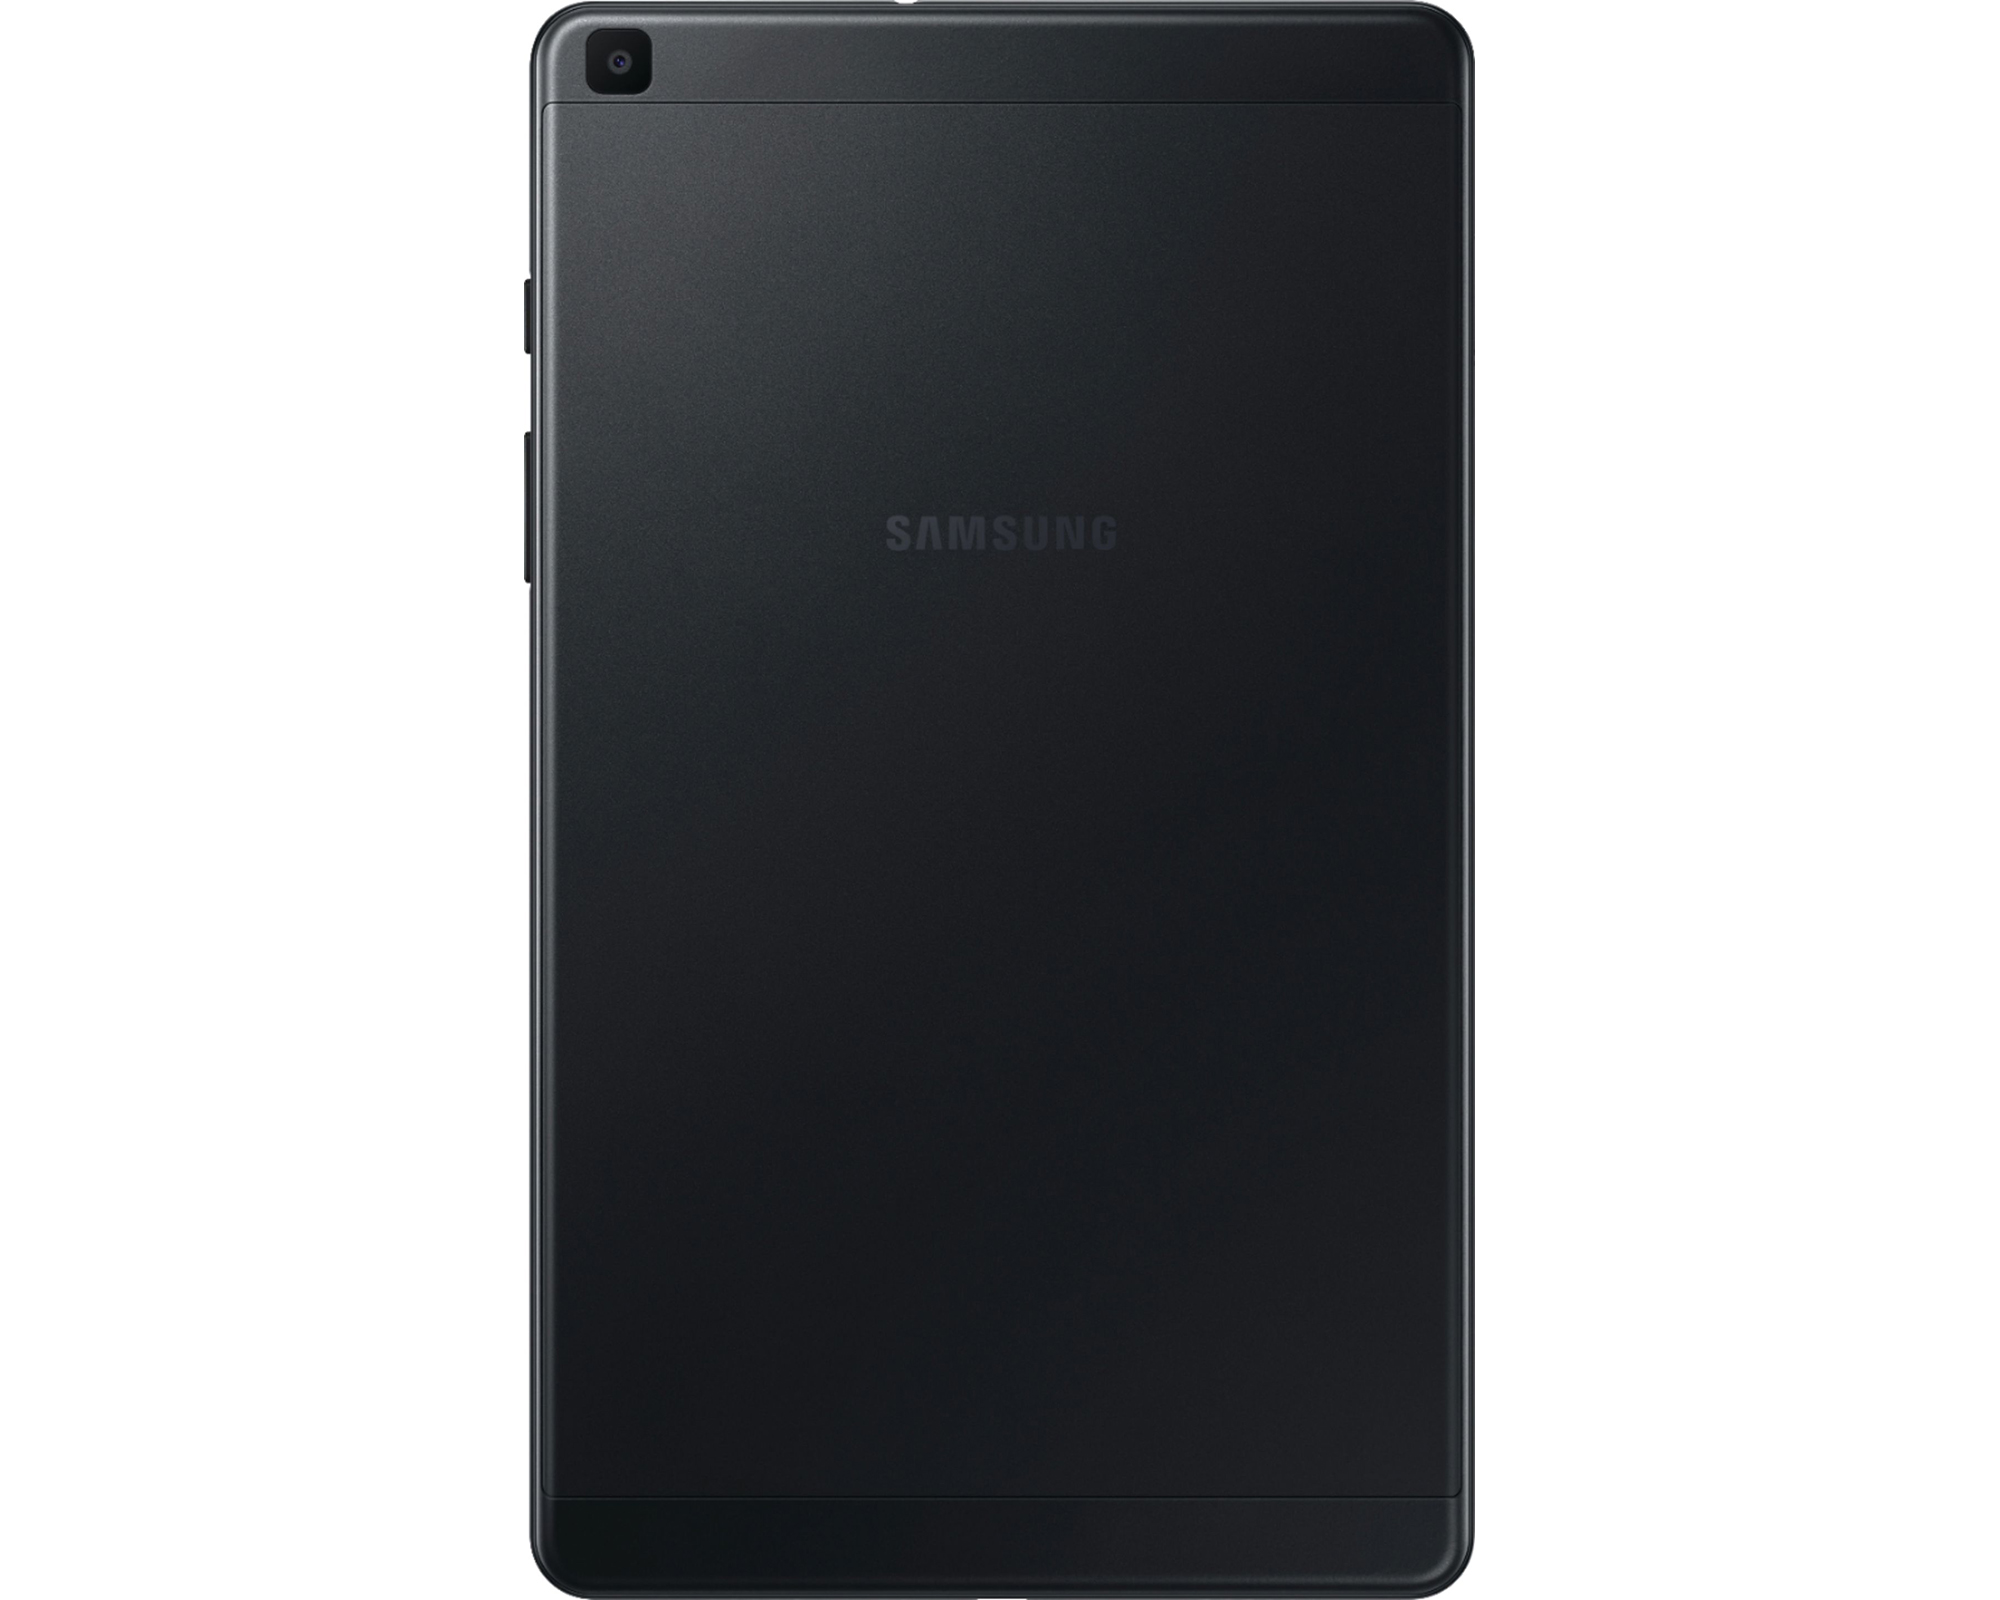 SAMSUNG Galaxy Tab A, 8.0" Tablet 32GB (Wi-Fi), Black - image 5 of 9